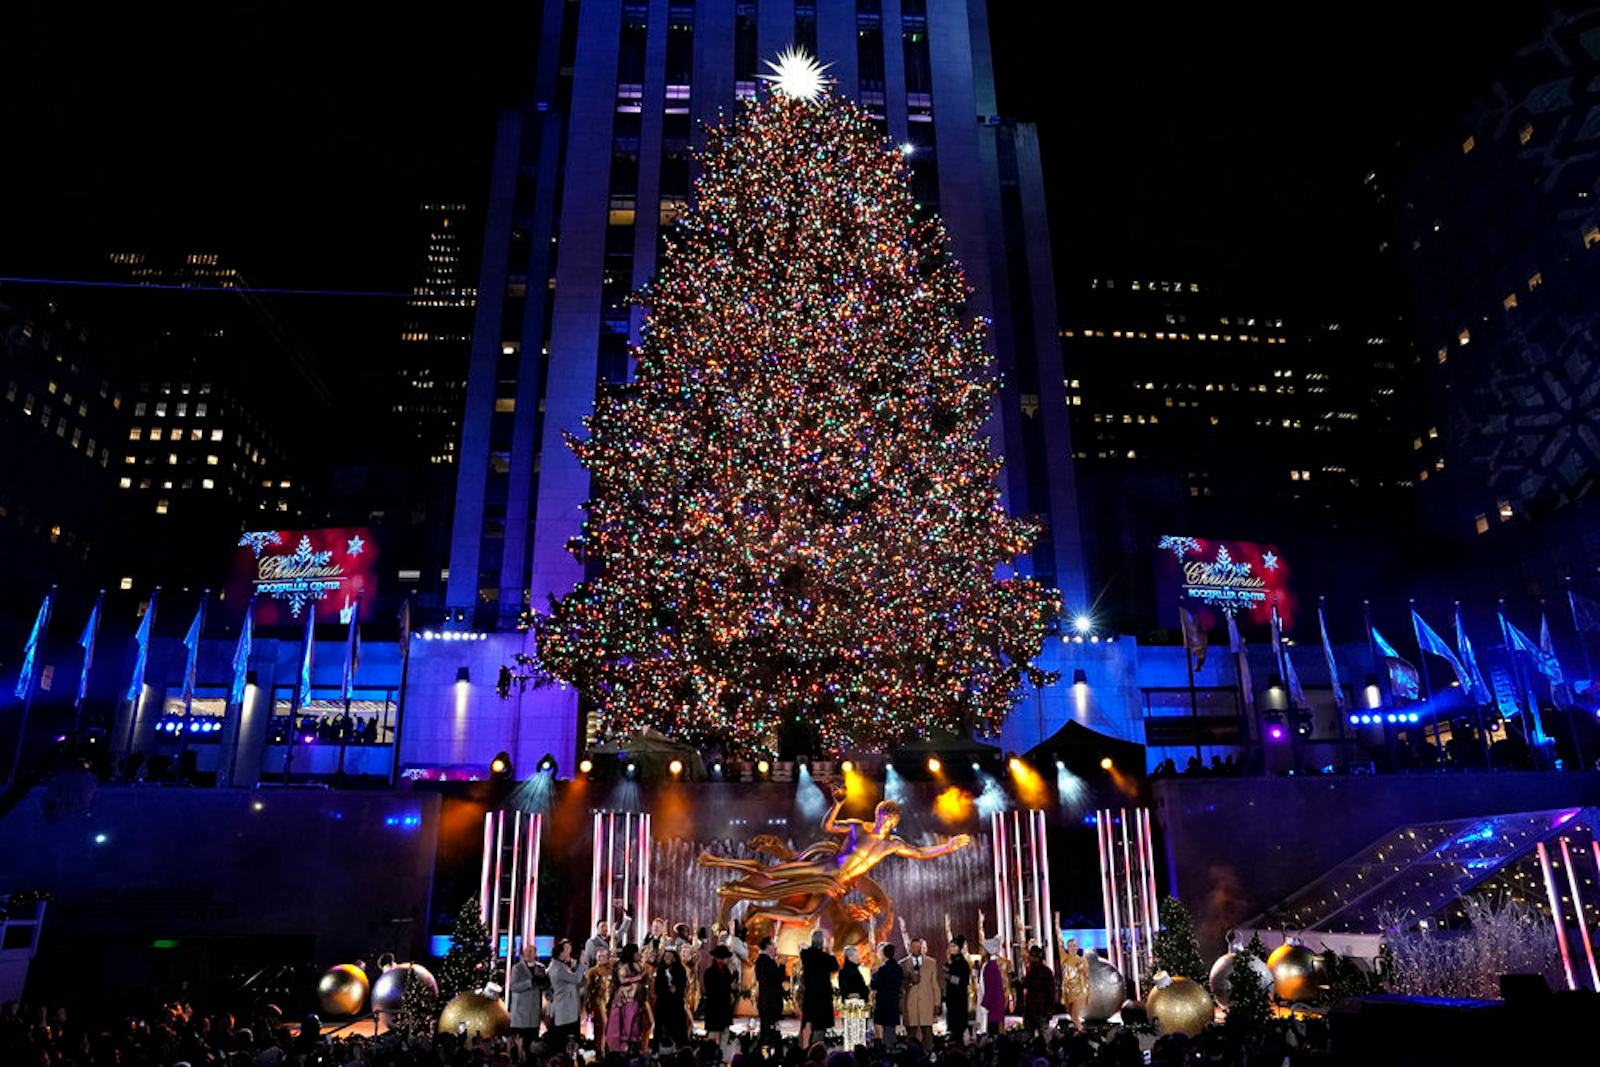 How To Watch & Stream The Rockefeller Center Christmas Tree Lighting